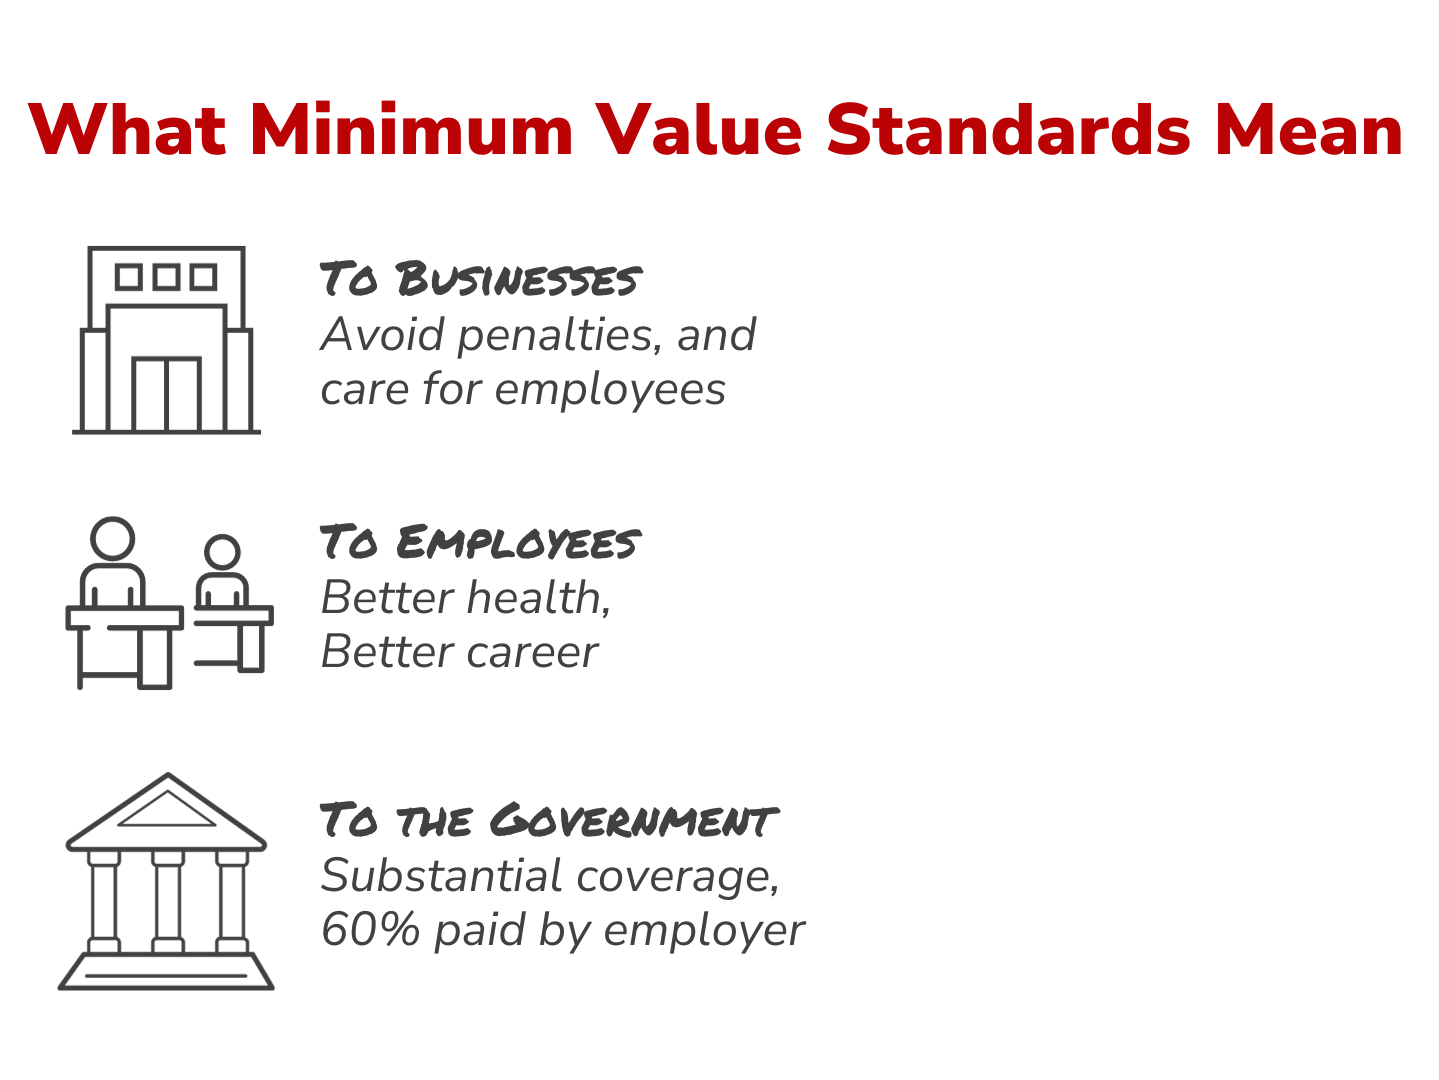 a poster explaining what minimum value standards mean